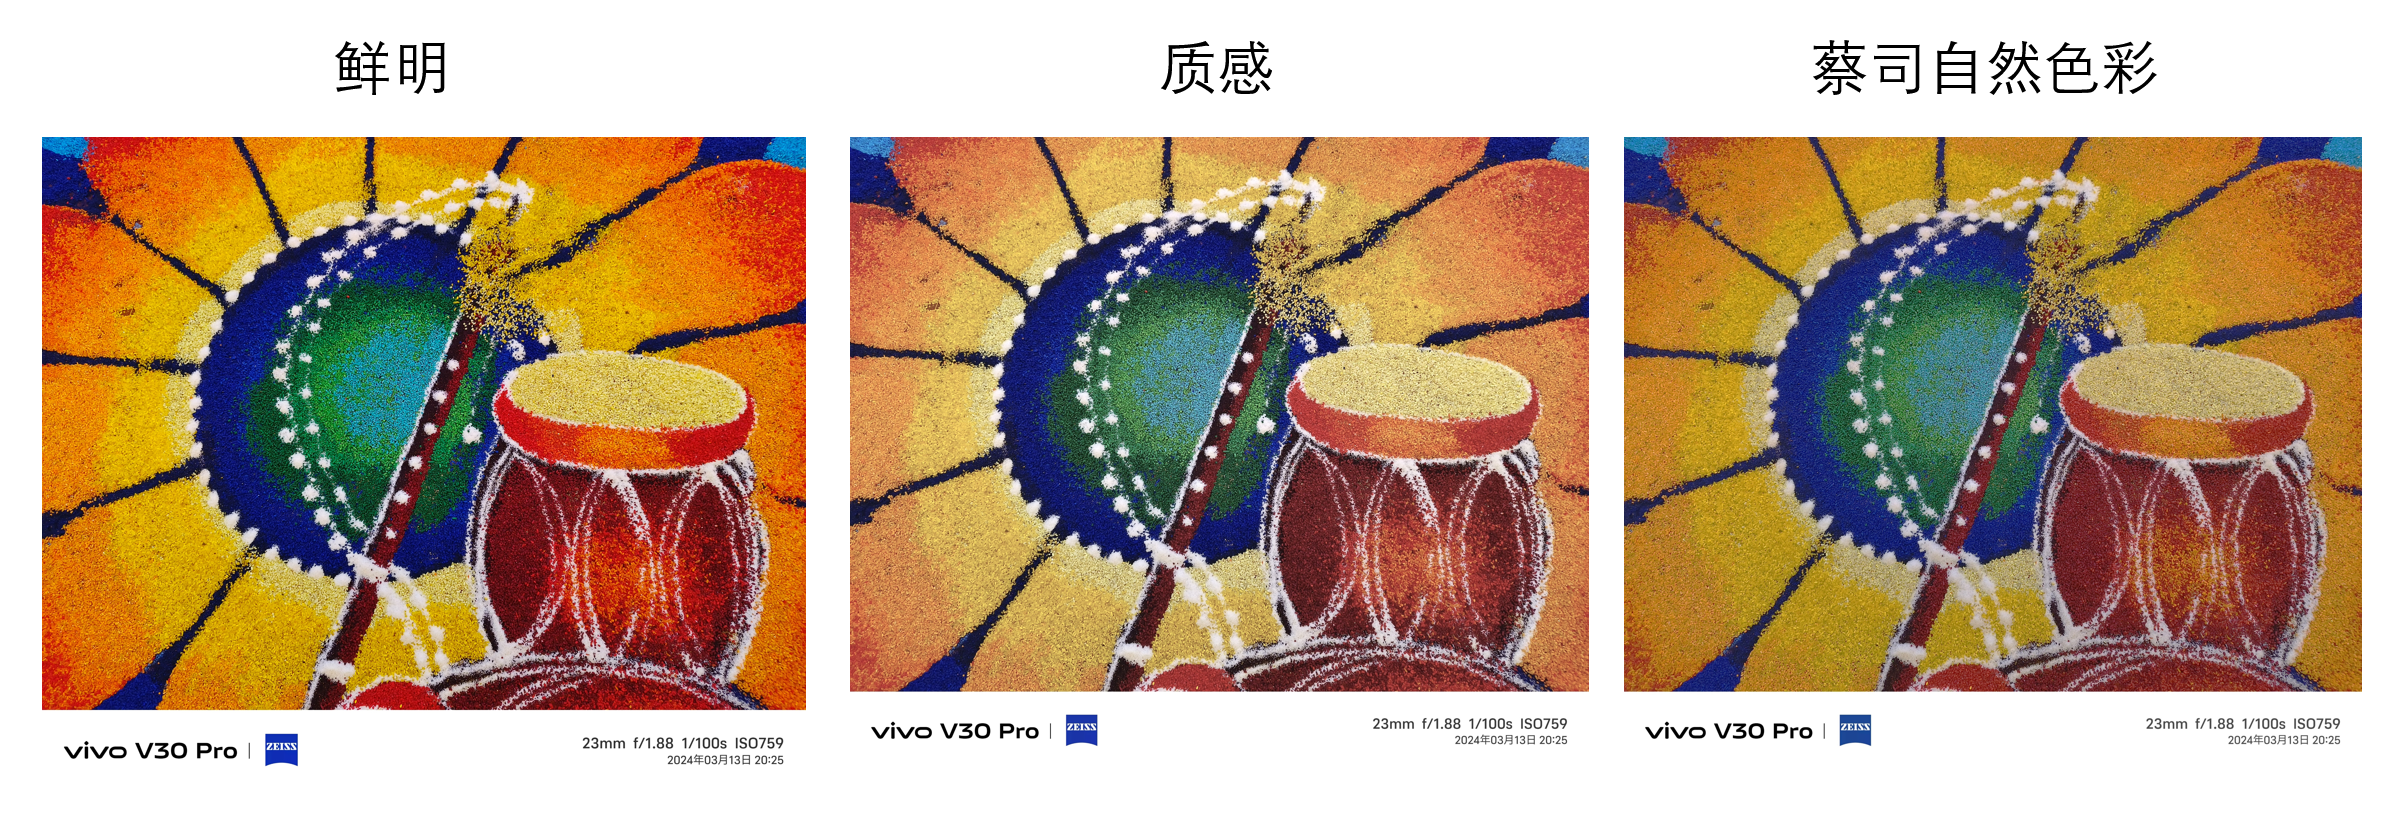 vivo V30 Pro：蔡司三摄+柔光环人像3.0，专业摄影普及化的里程碑 150